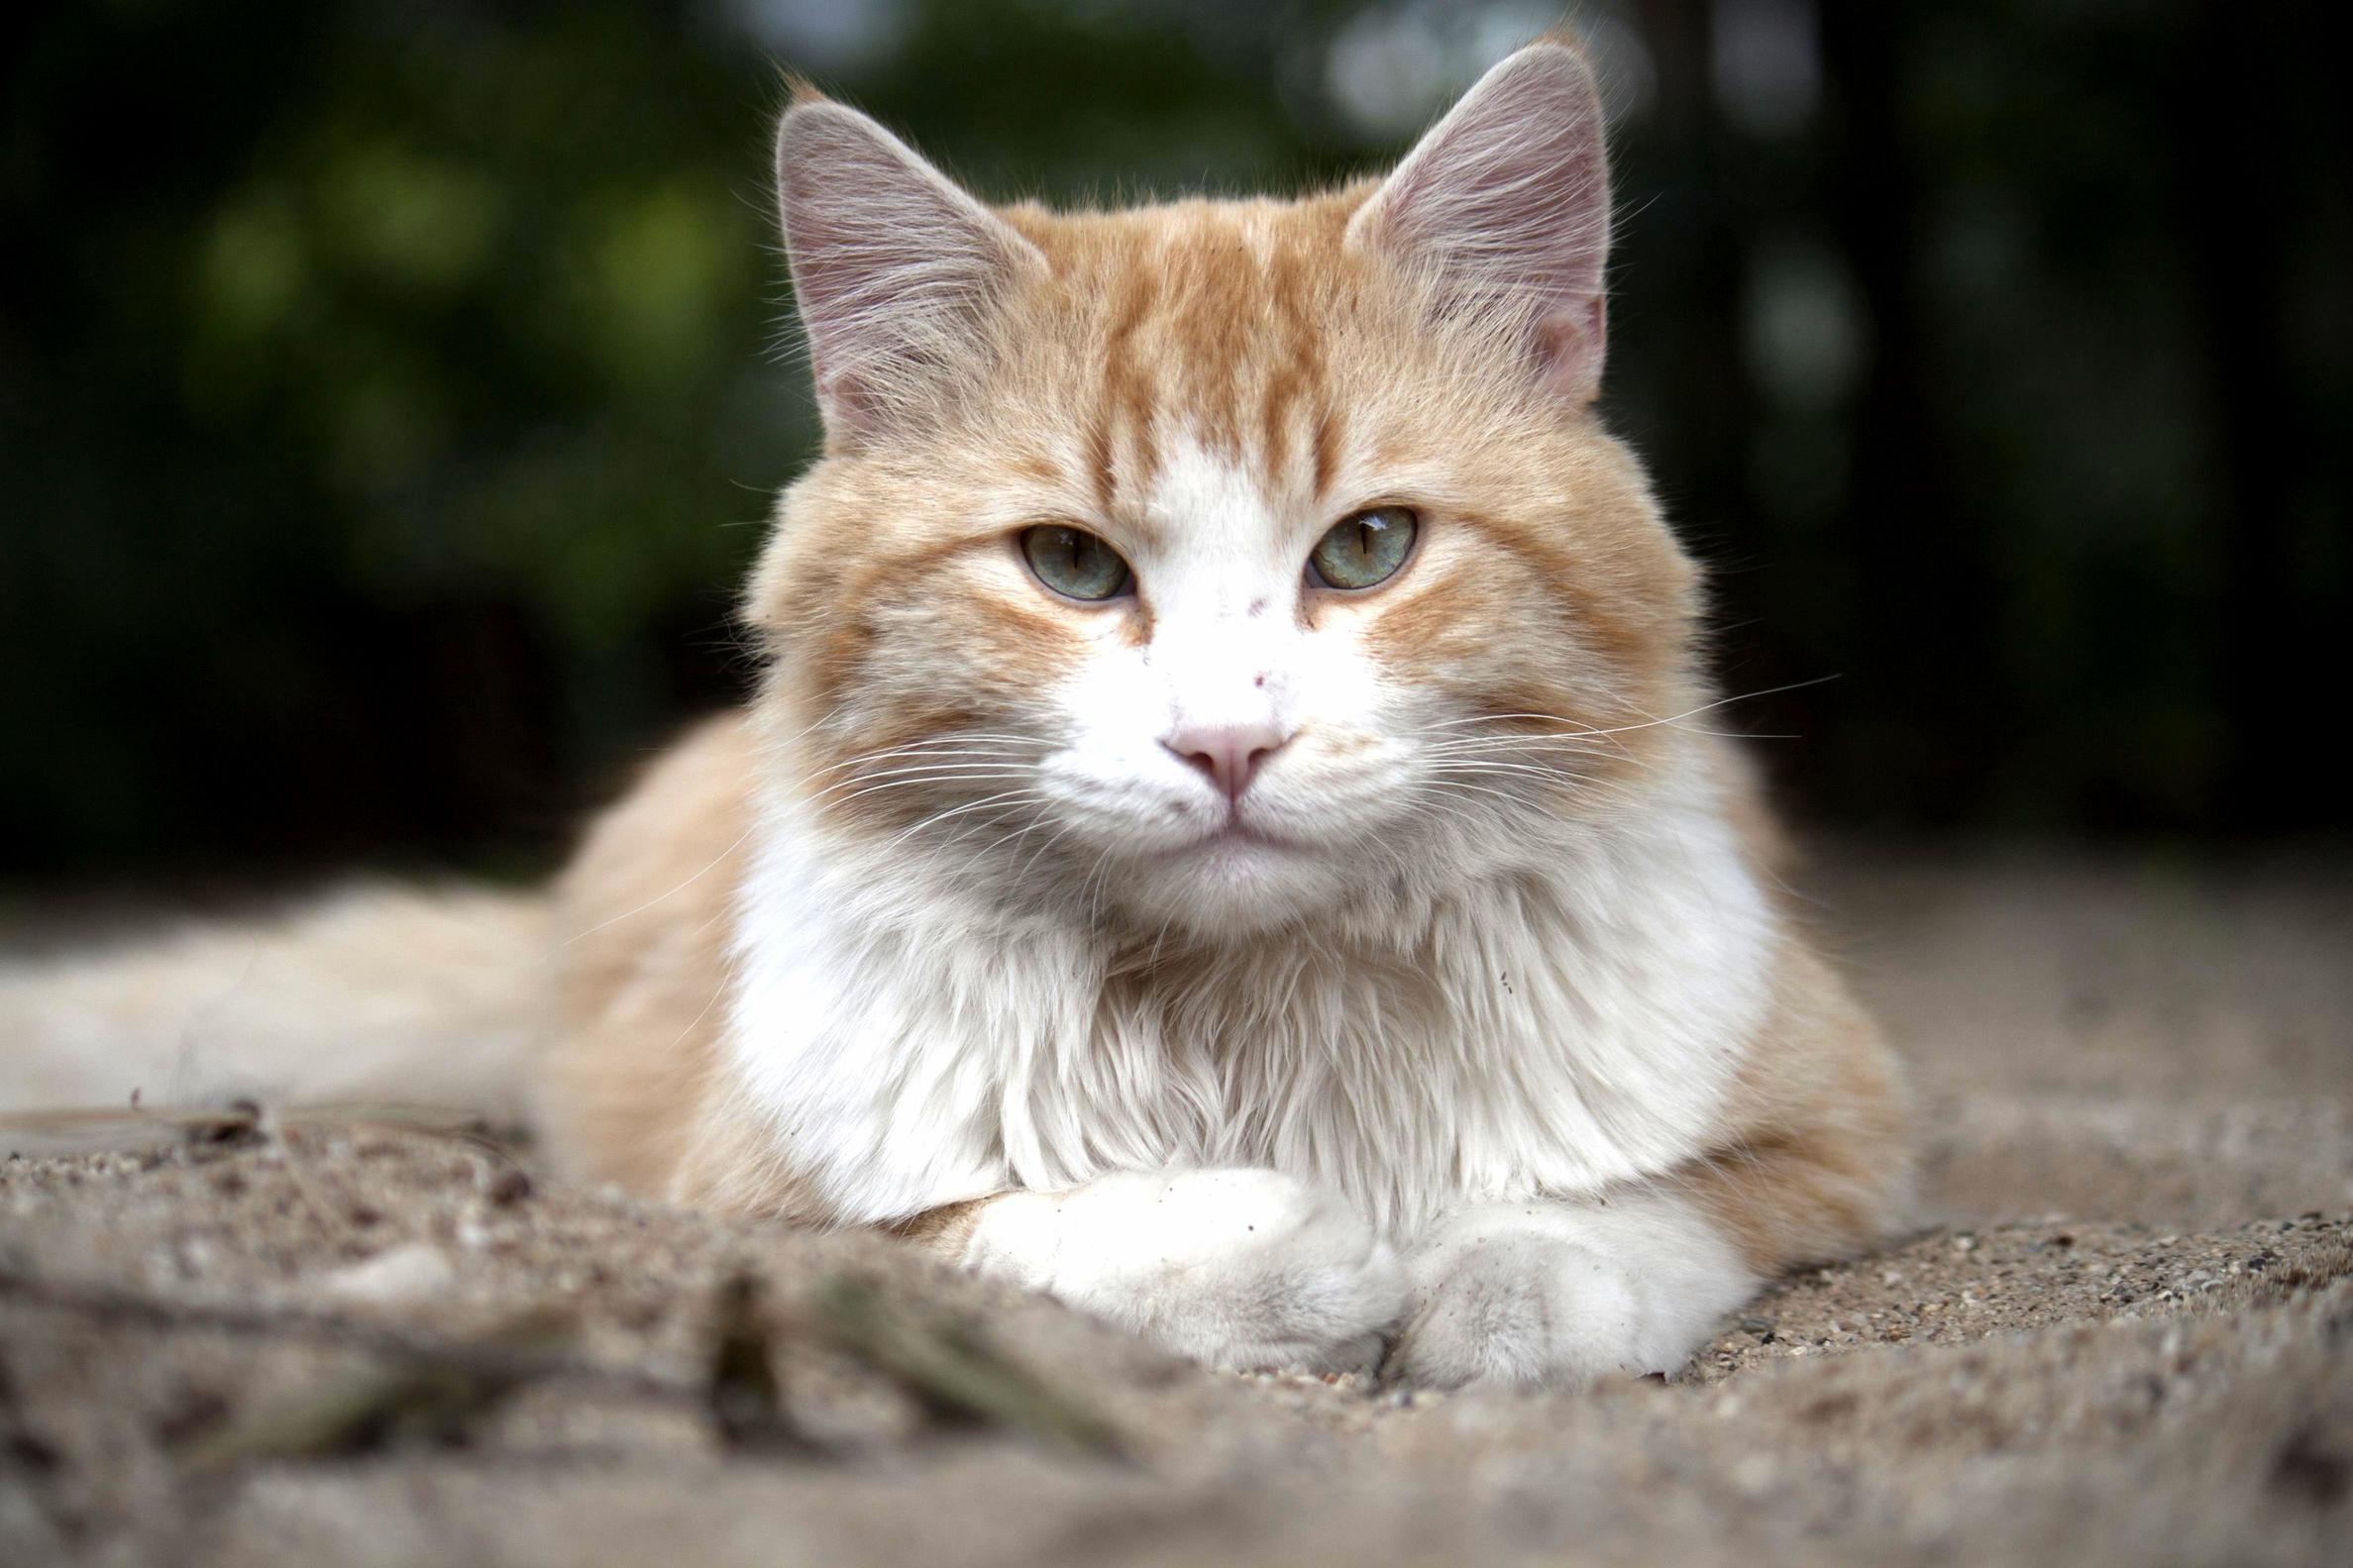 Our neighbor kitty – william cattis